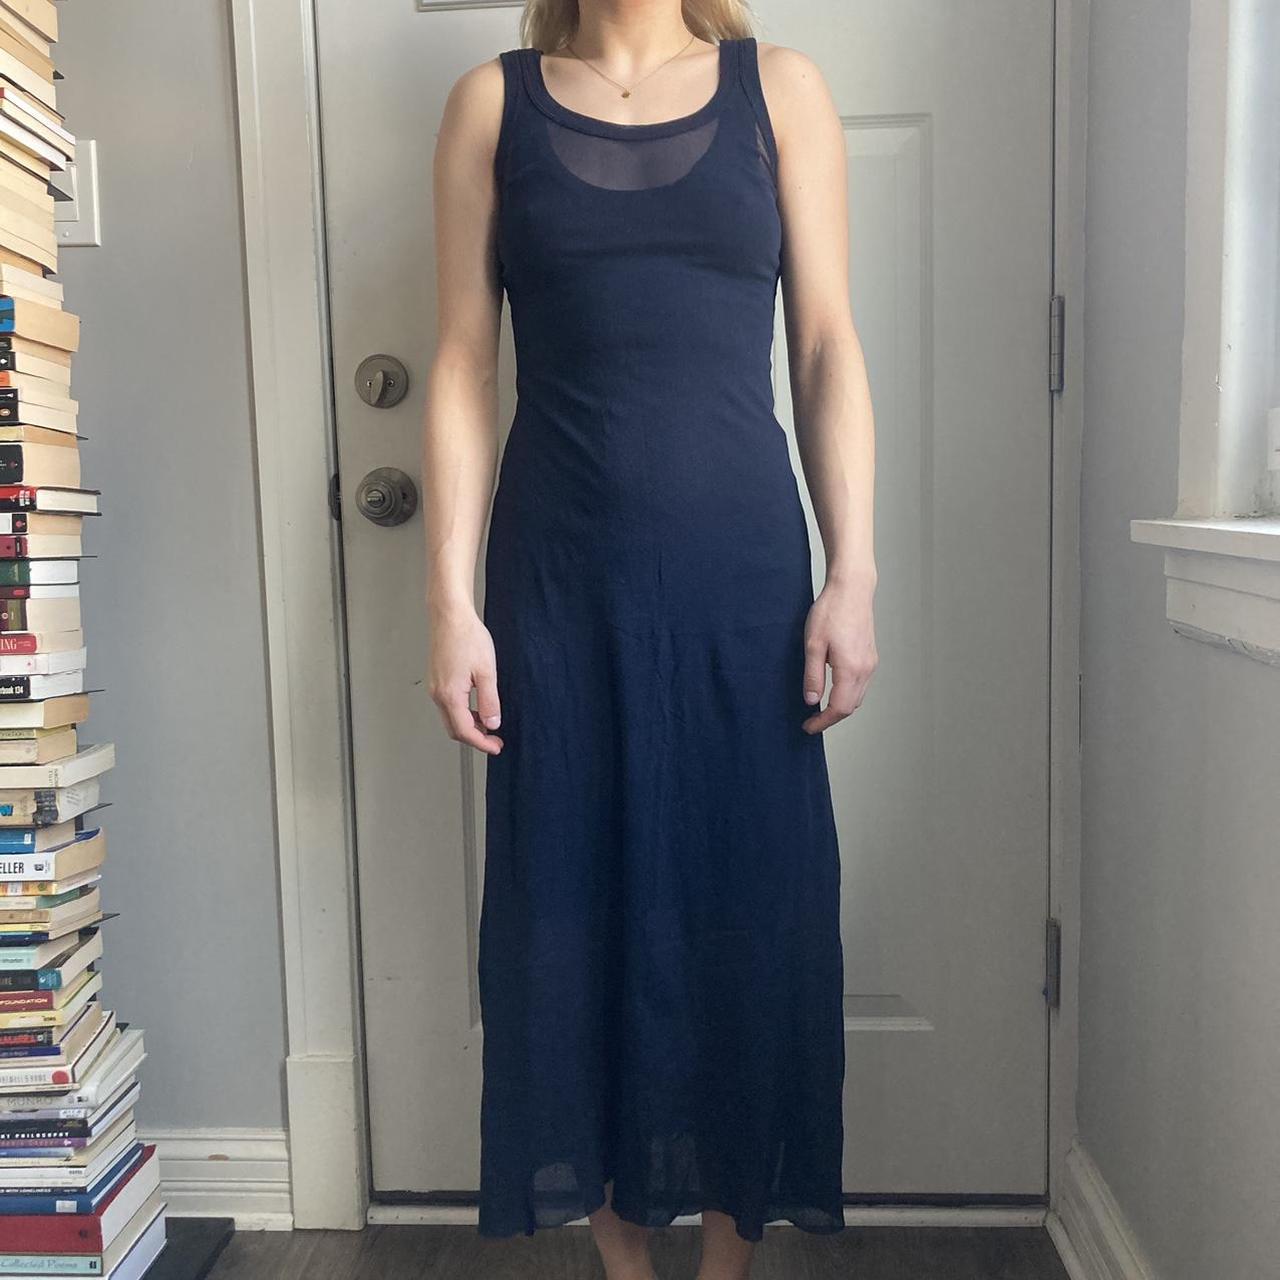 Jean-Paul Gaultier Women's Navy and Blue Dress | Depop